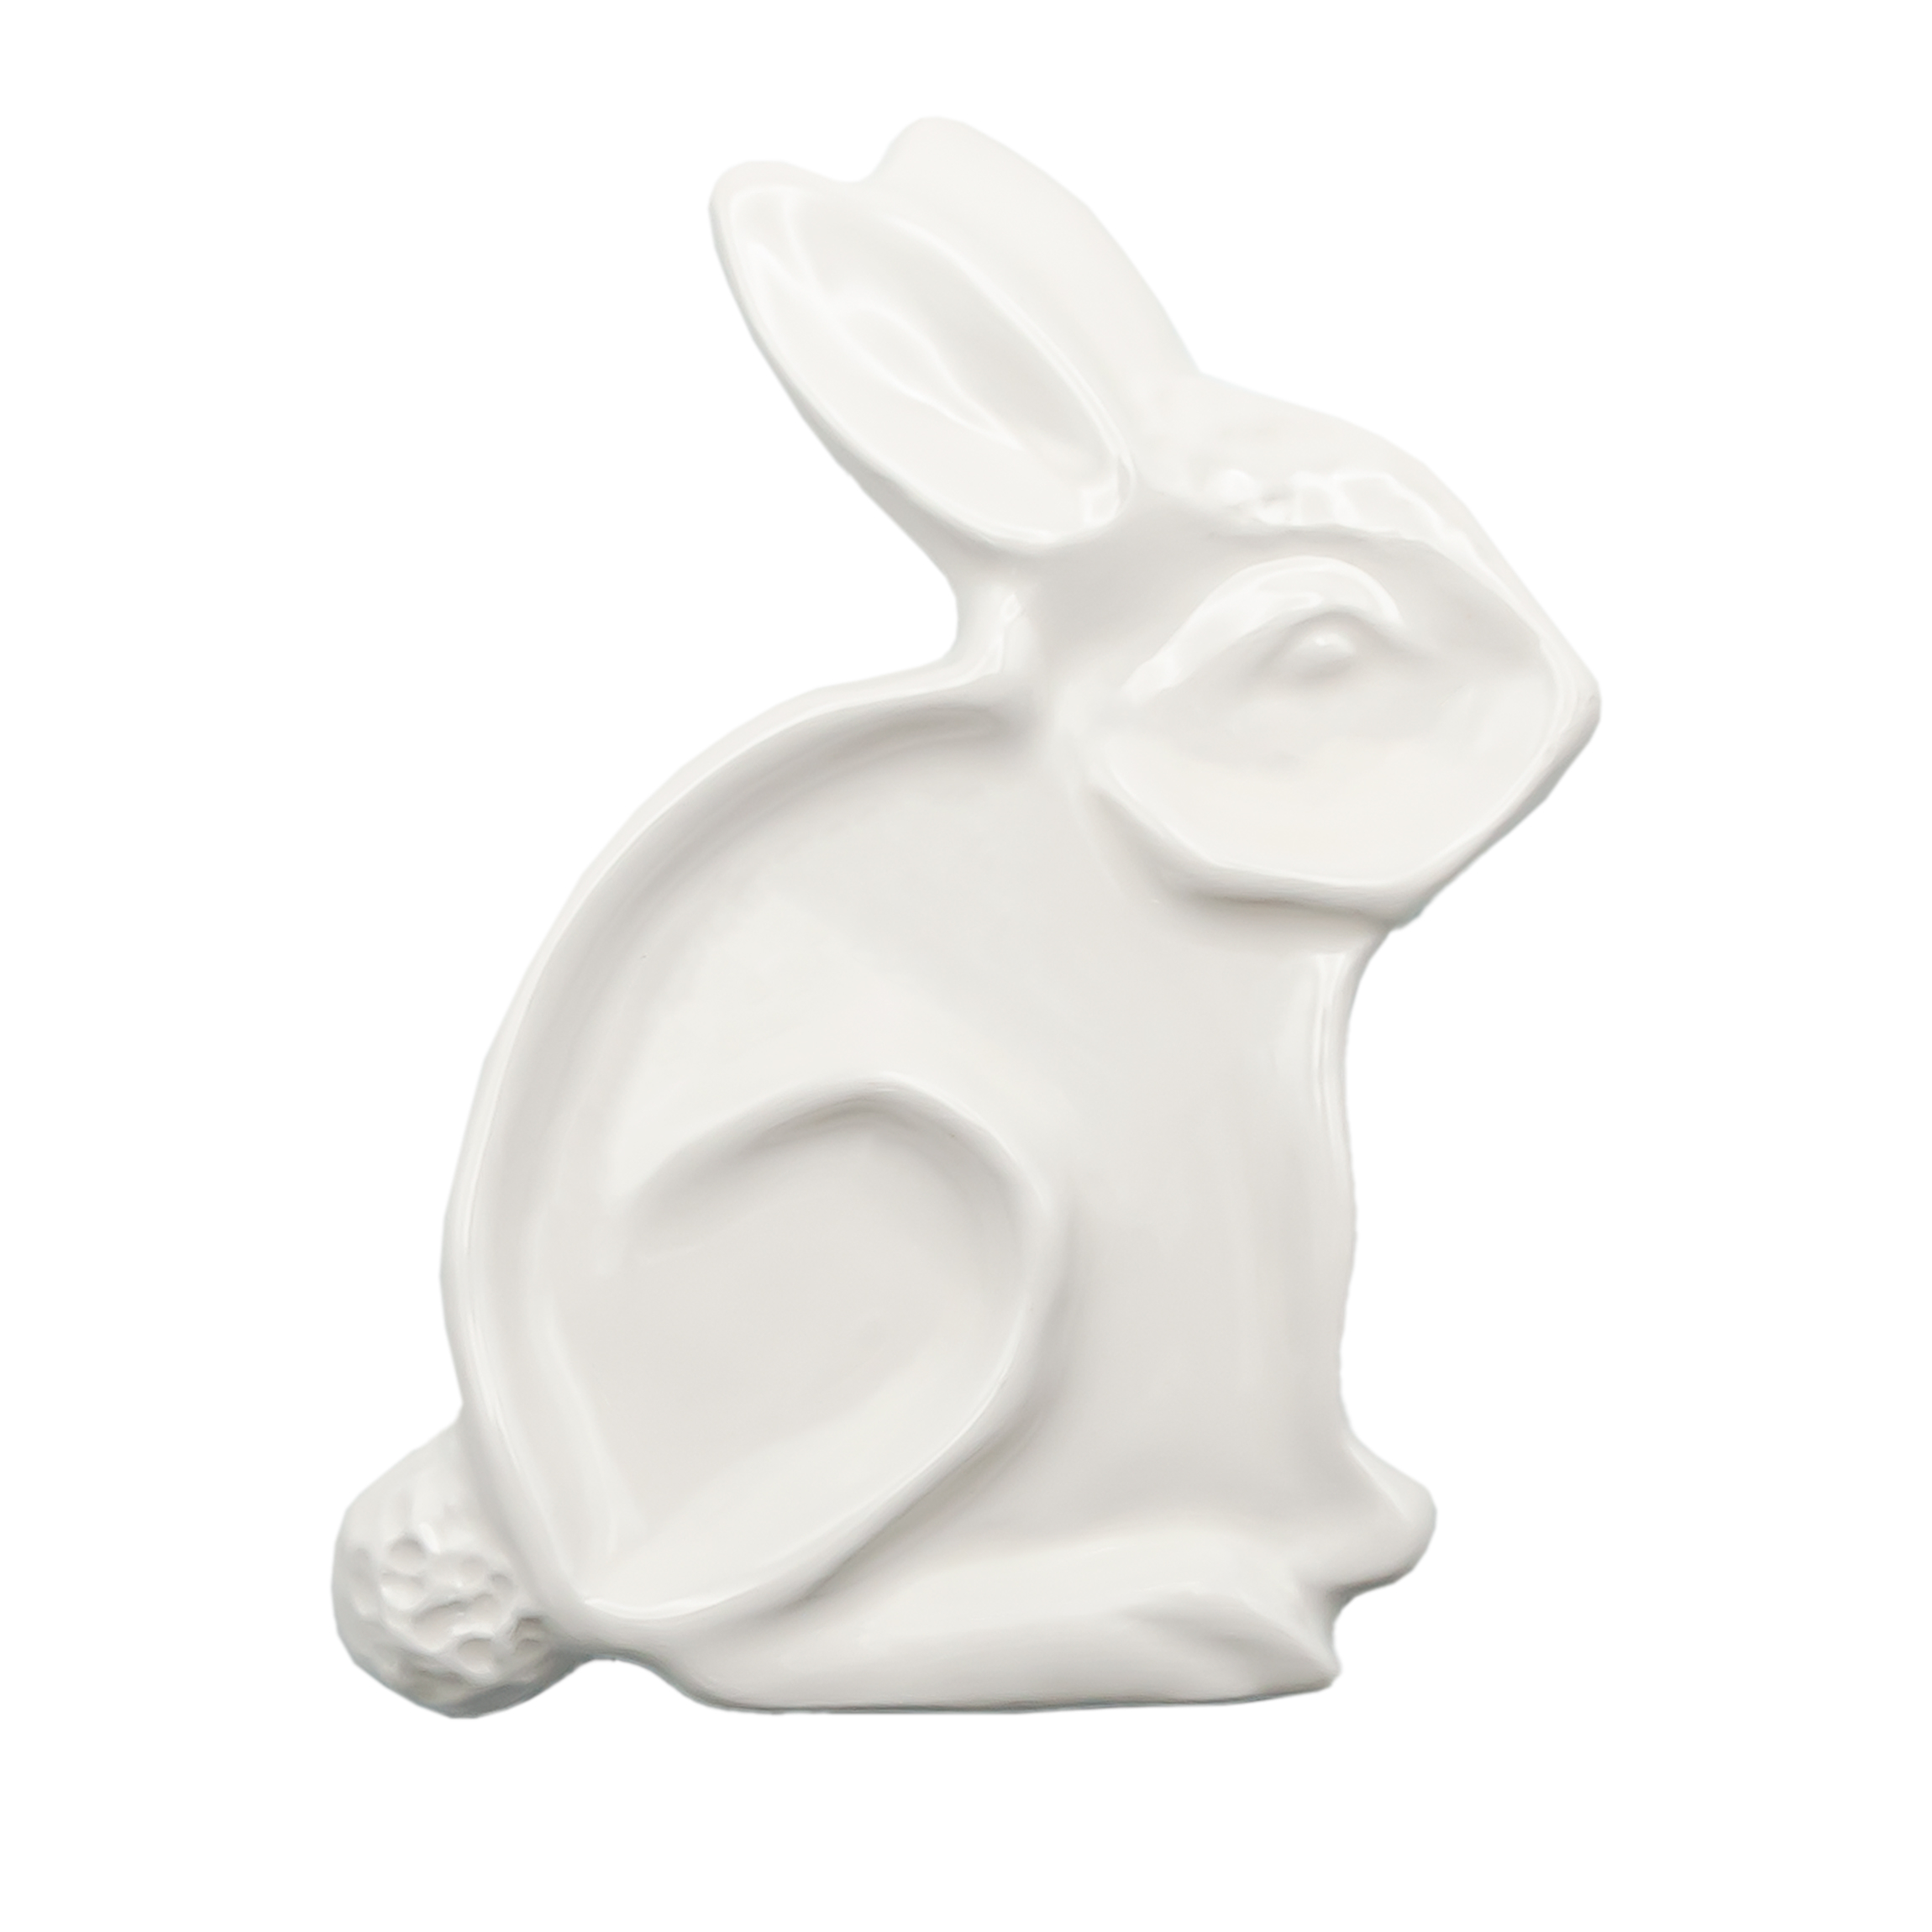 پالت مدل خرگوش کد 3